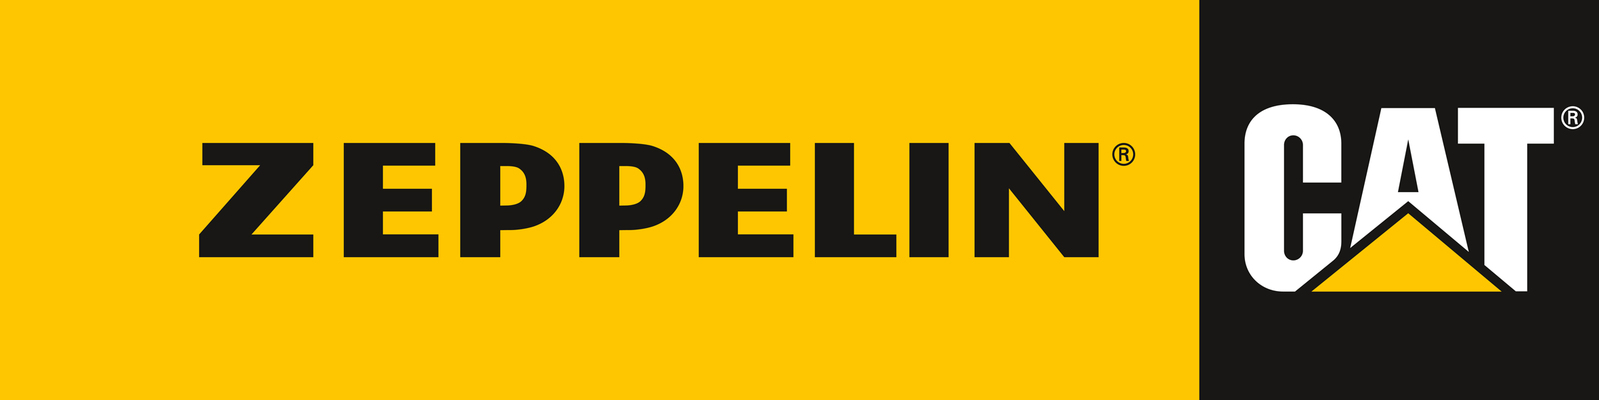 Profile image for Zeppelin Sverige AB